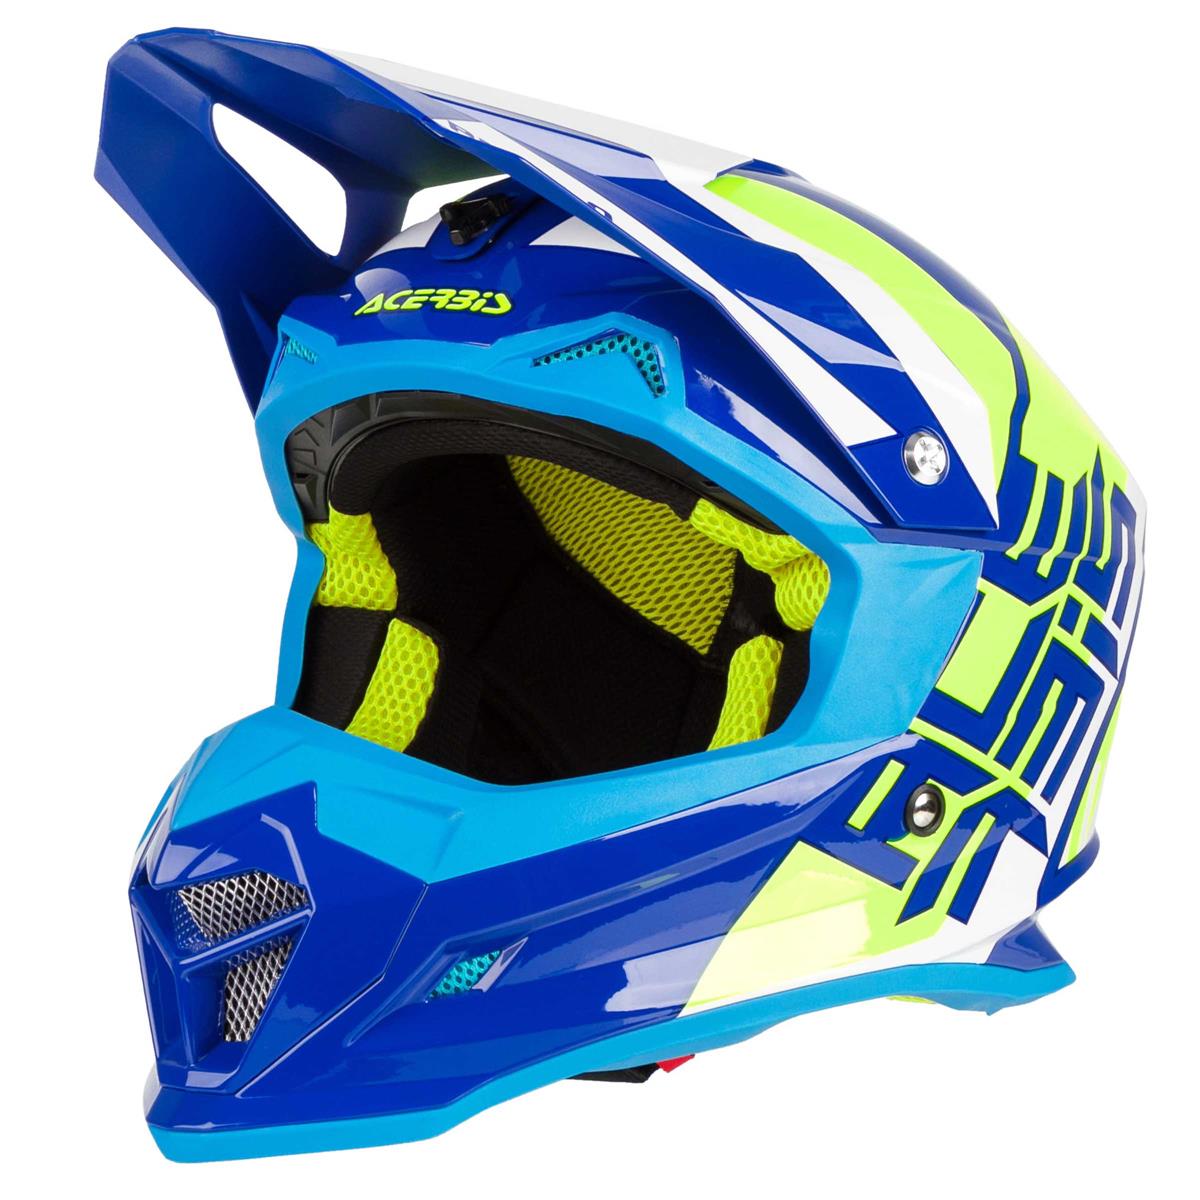 Acerbis Helmet Profile 4 Blue/Yellow